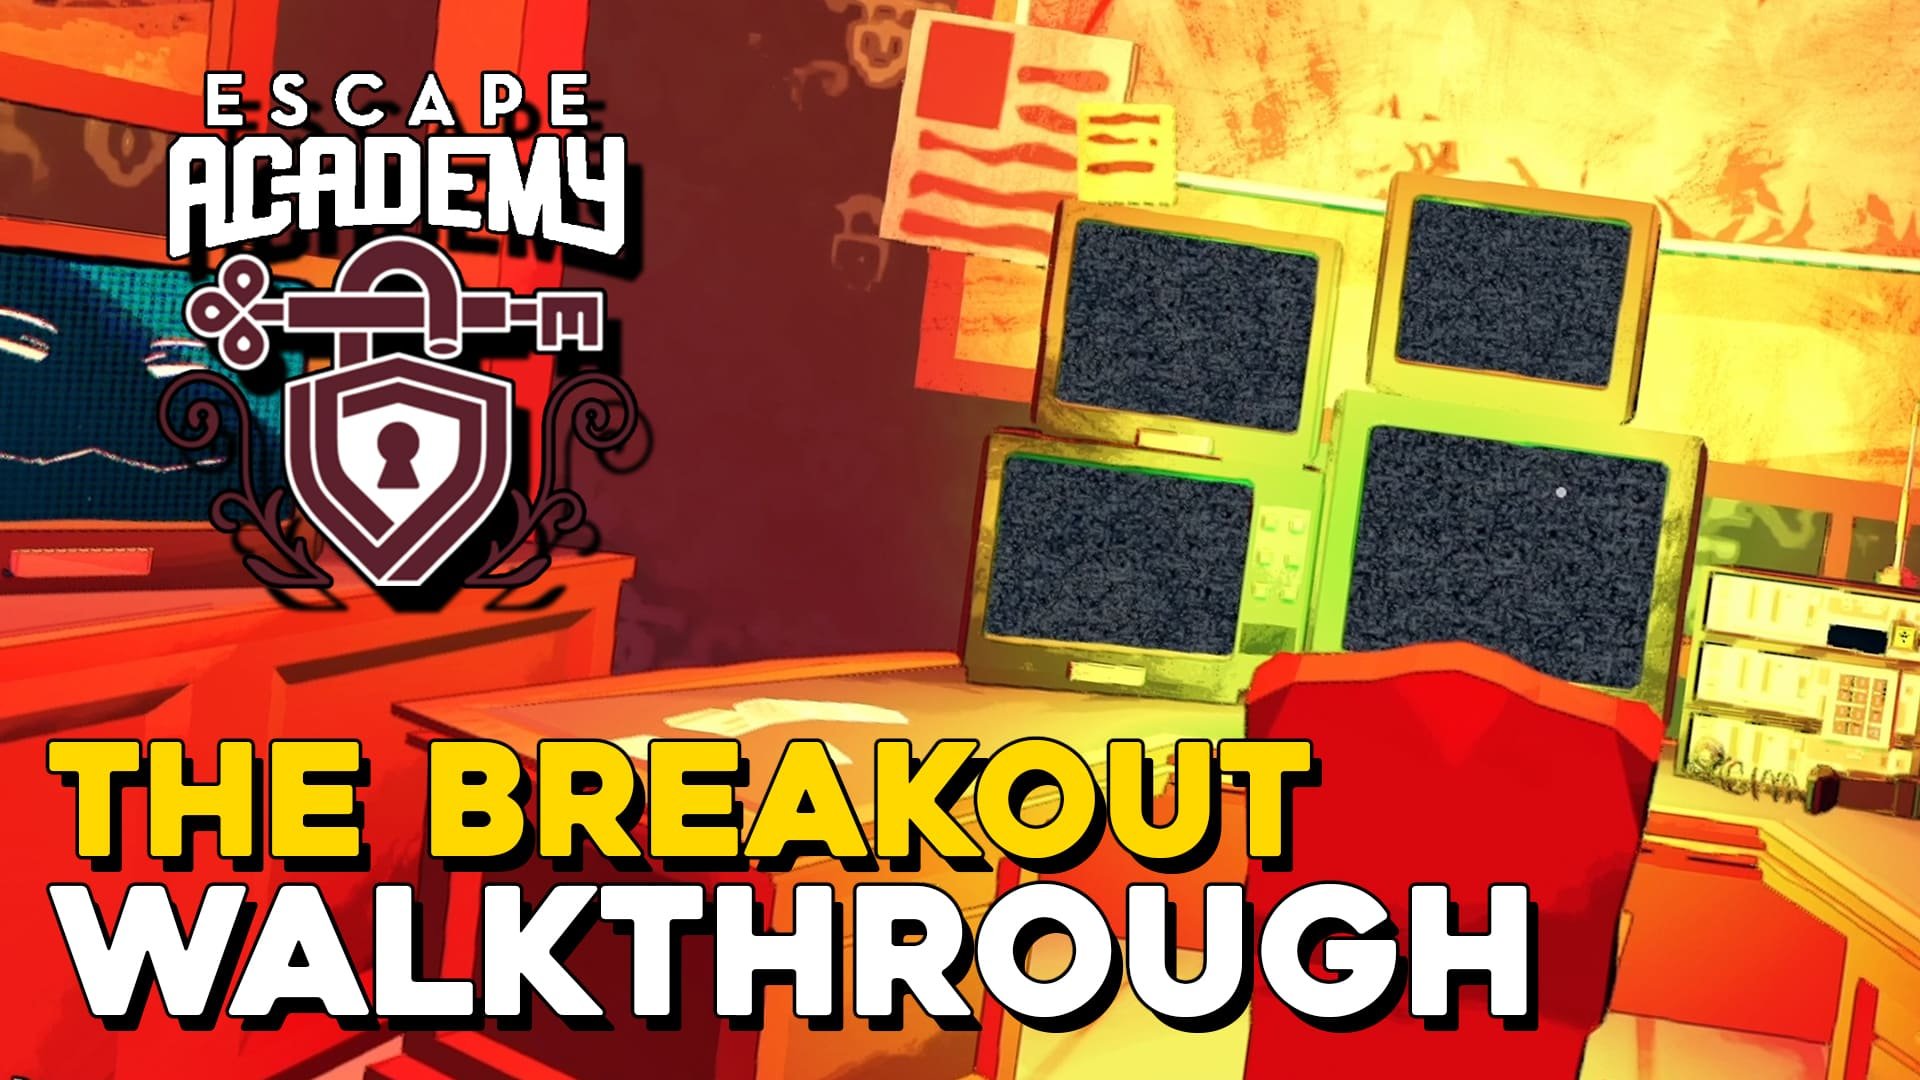 Escape Academy The Breakout Walkthrough (copia) (copia) (copia)